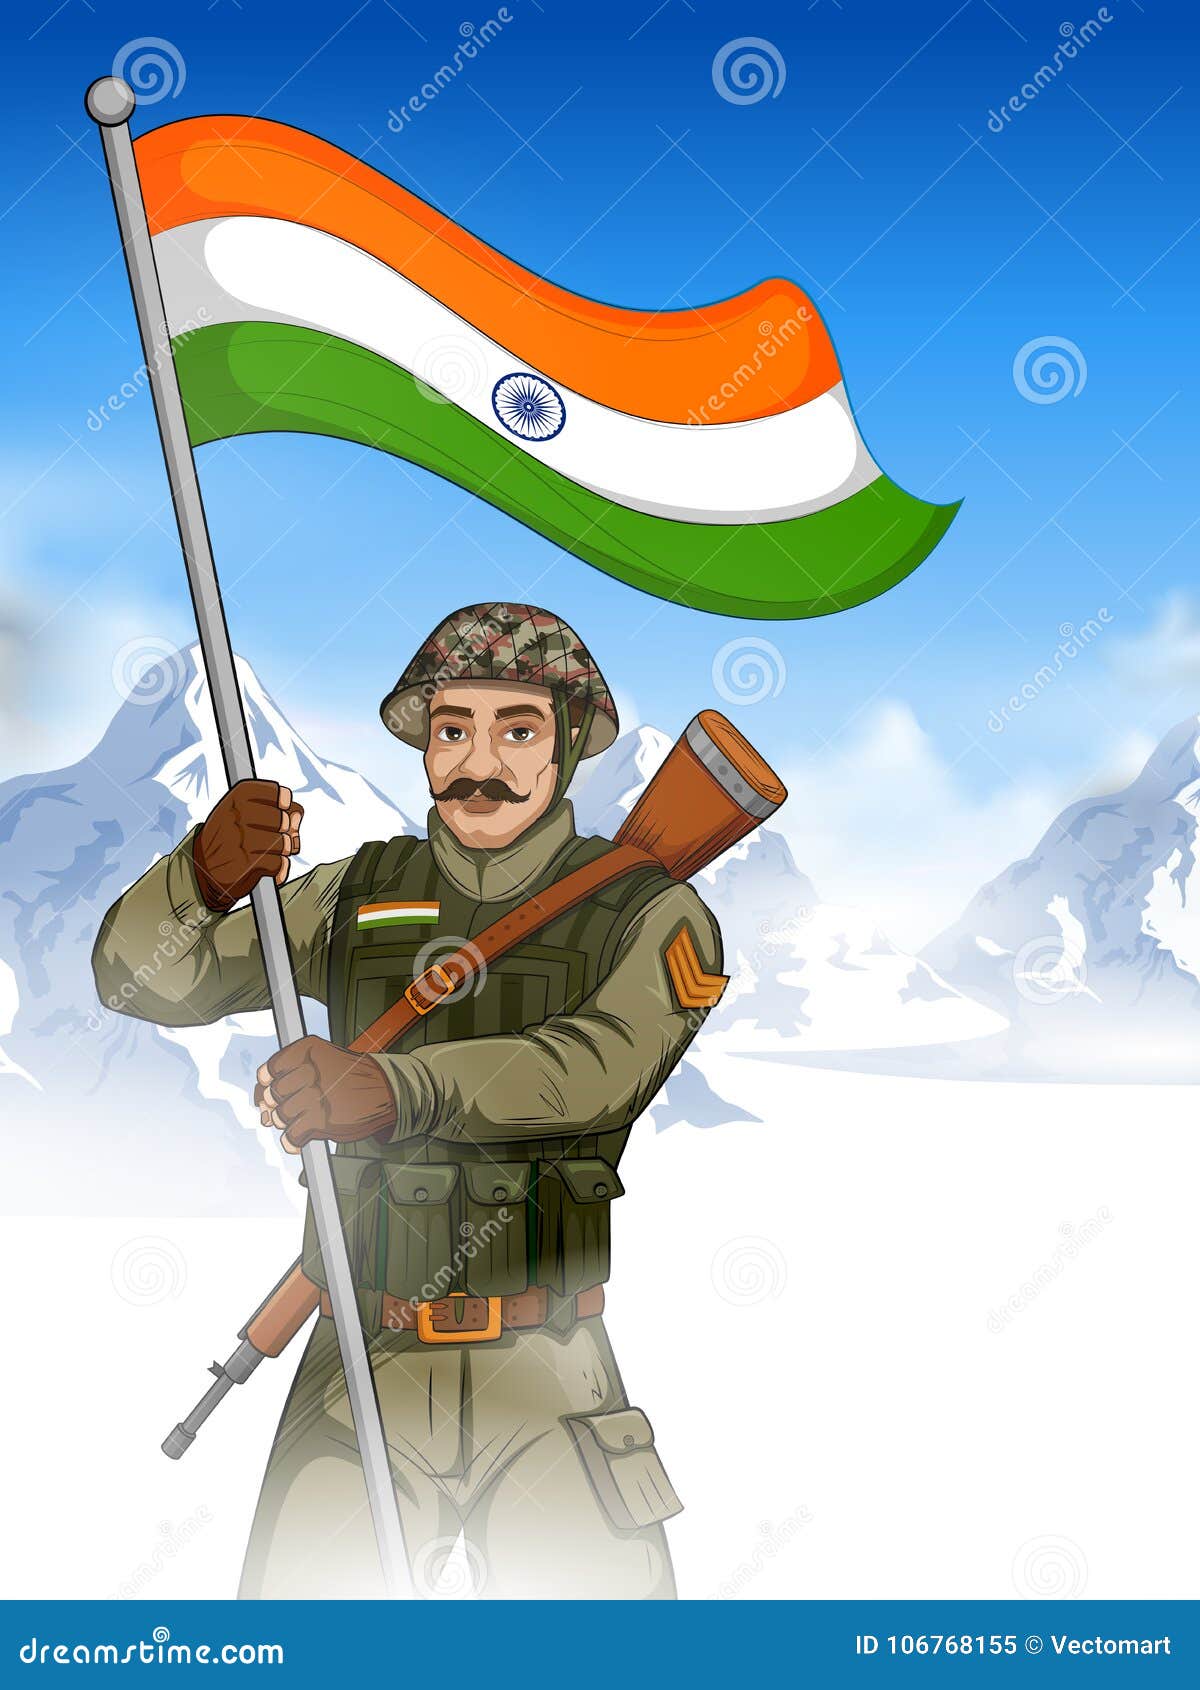 Indian Army by NoisyMutant on DeviantArt-saigonsouth.com.vn